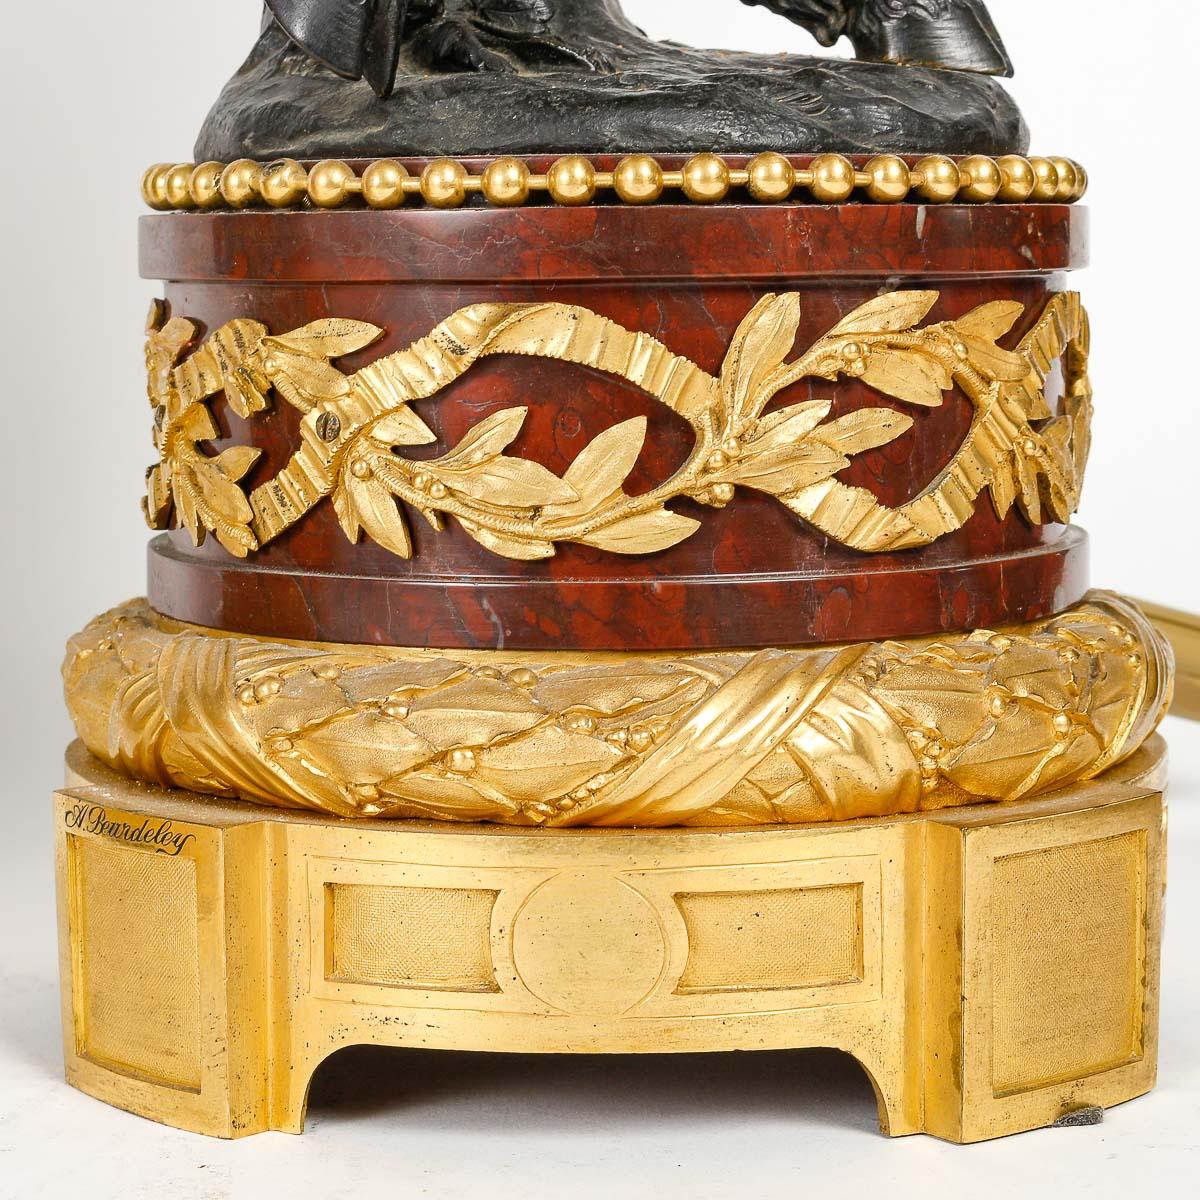 Napoleon III Pair of Amours Candelabra, Grande décoration, Gilt bronze, Antique bronze.